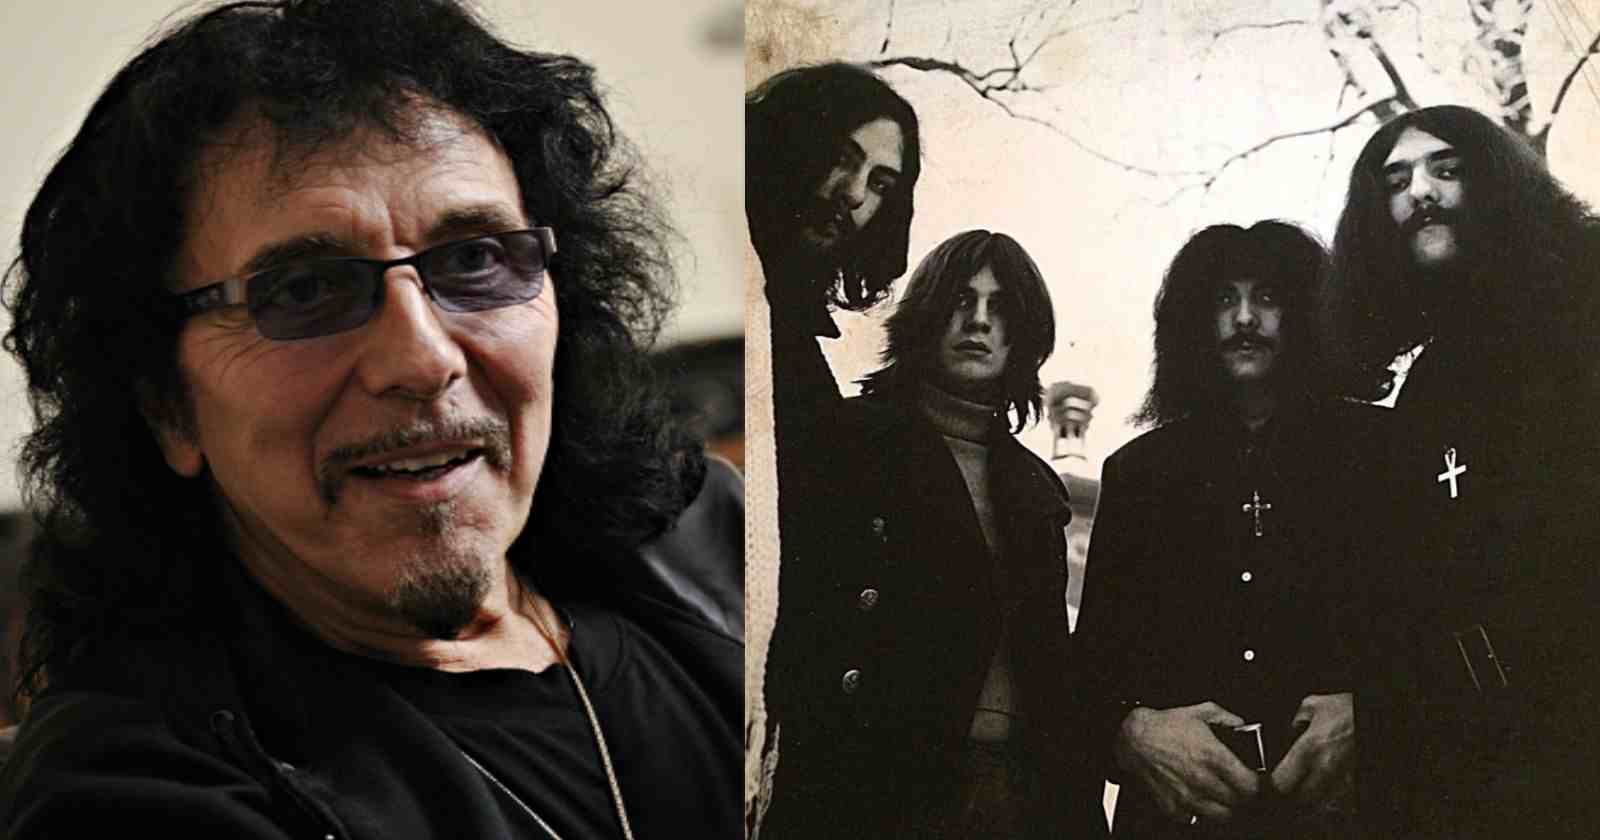 Tony Iommi Black Sabbath